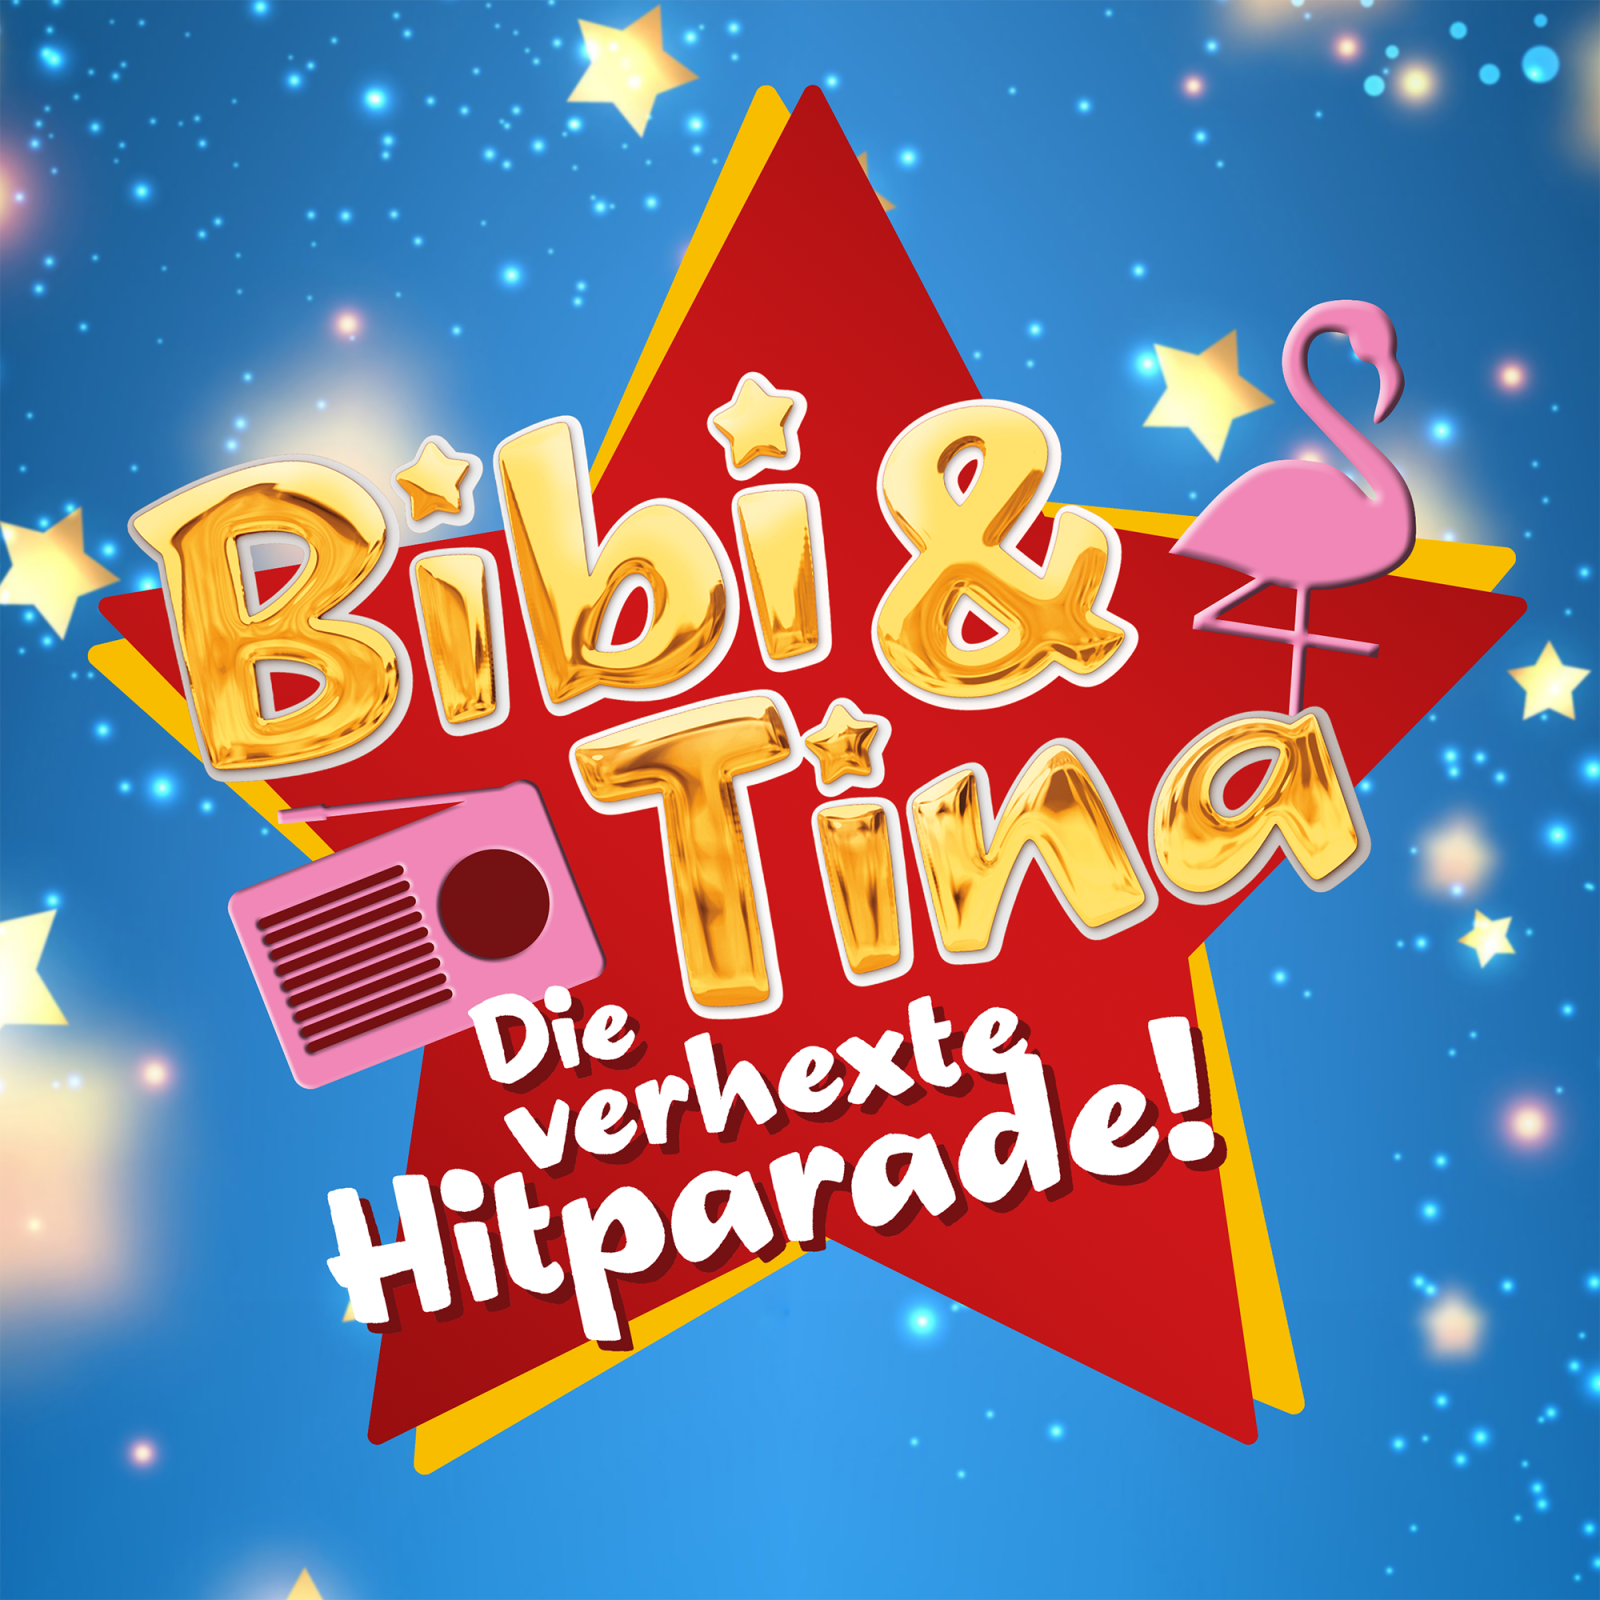 Bibi und Tina - die verhexte Hitparade